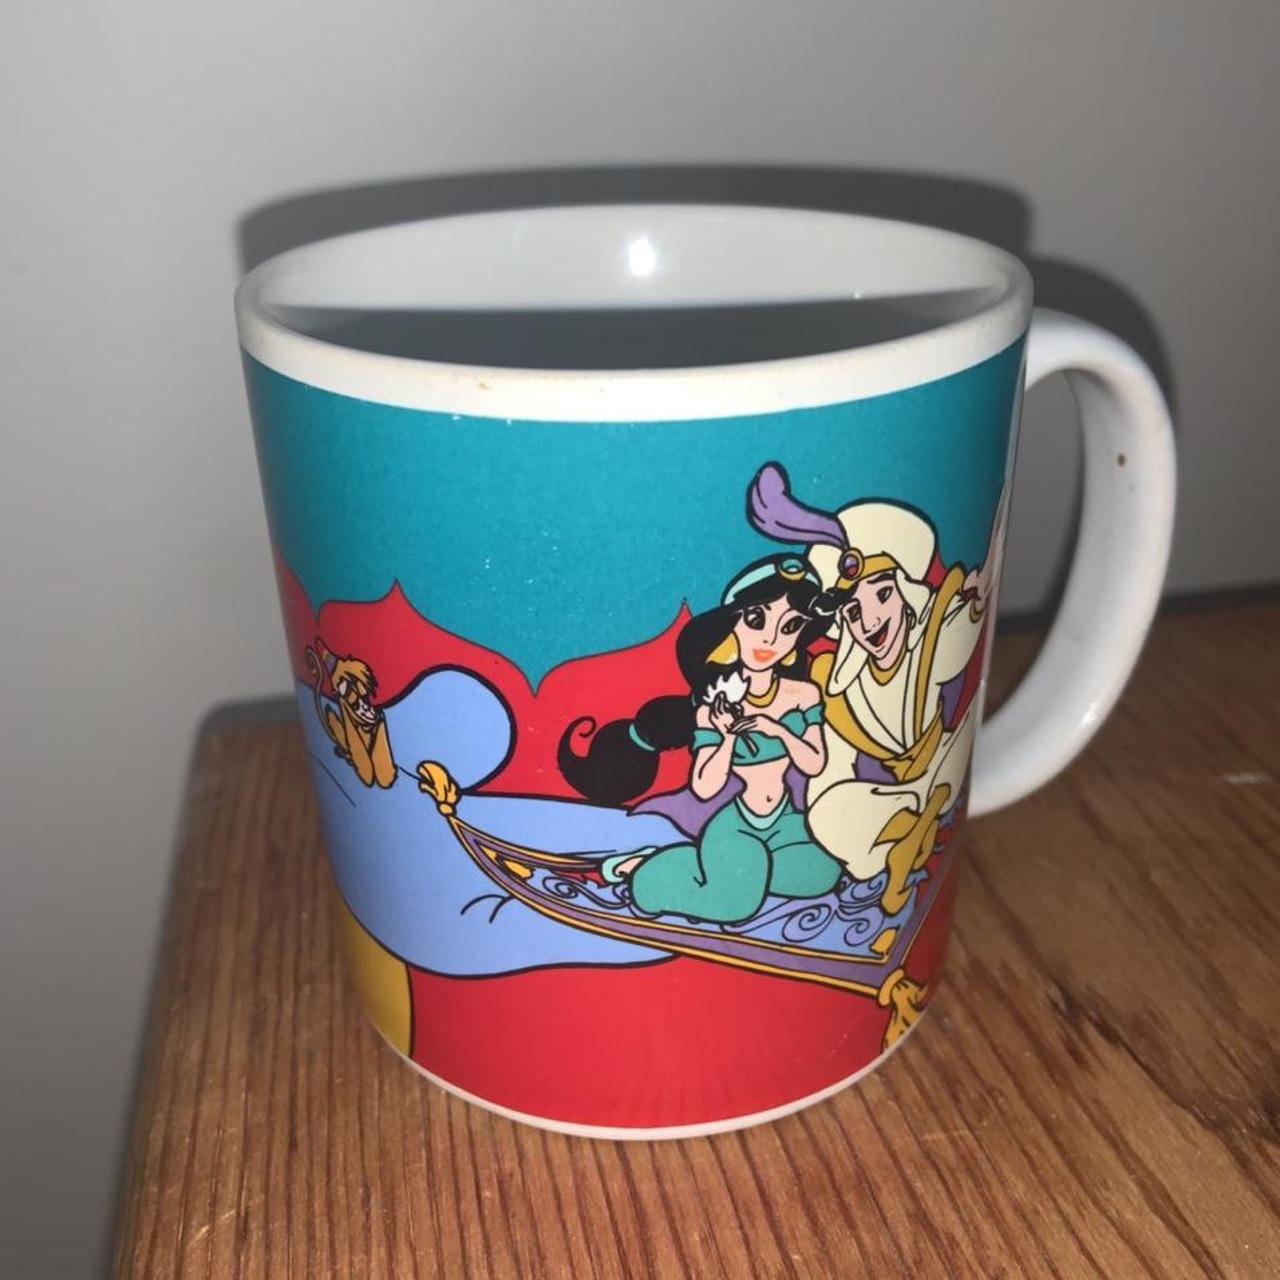 Aladdin Coffee Mug by CSA Images - Pixels